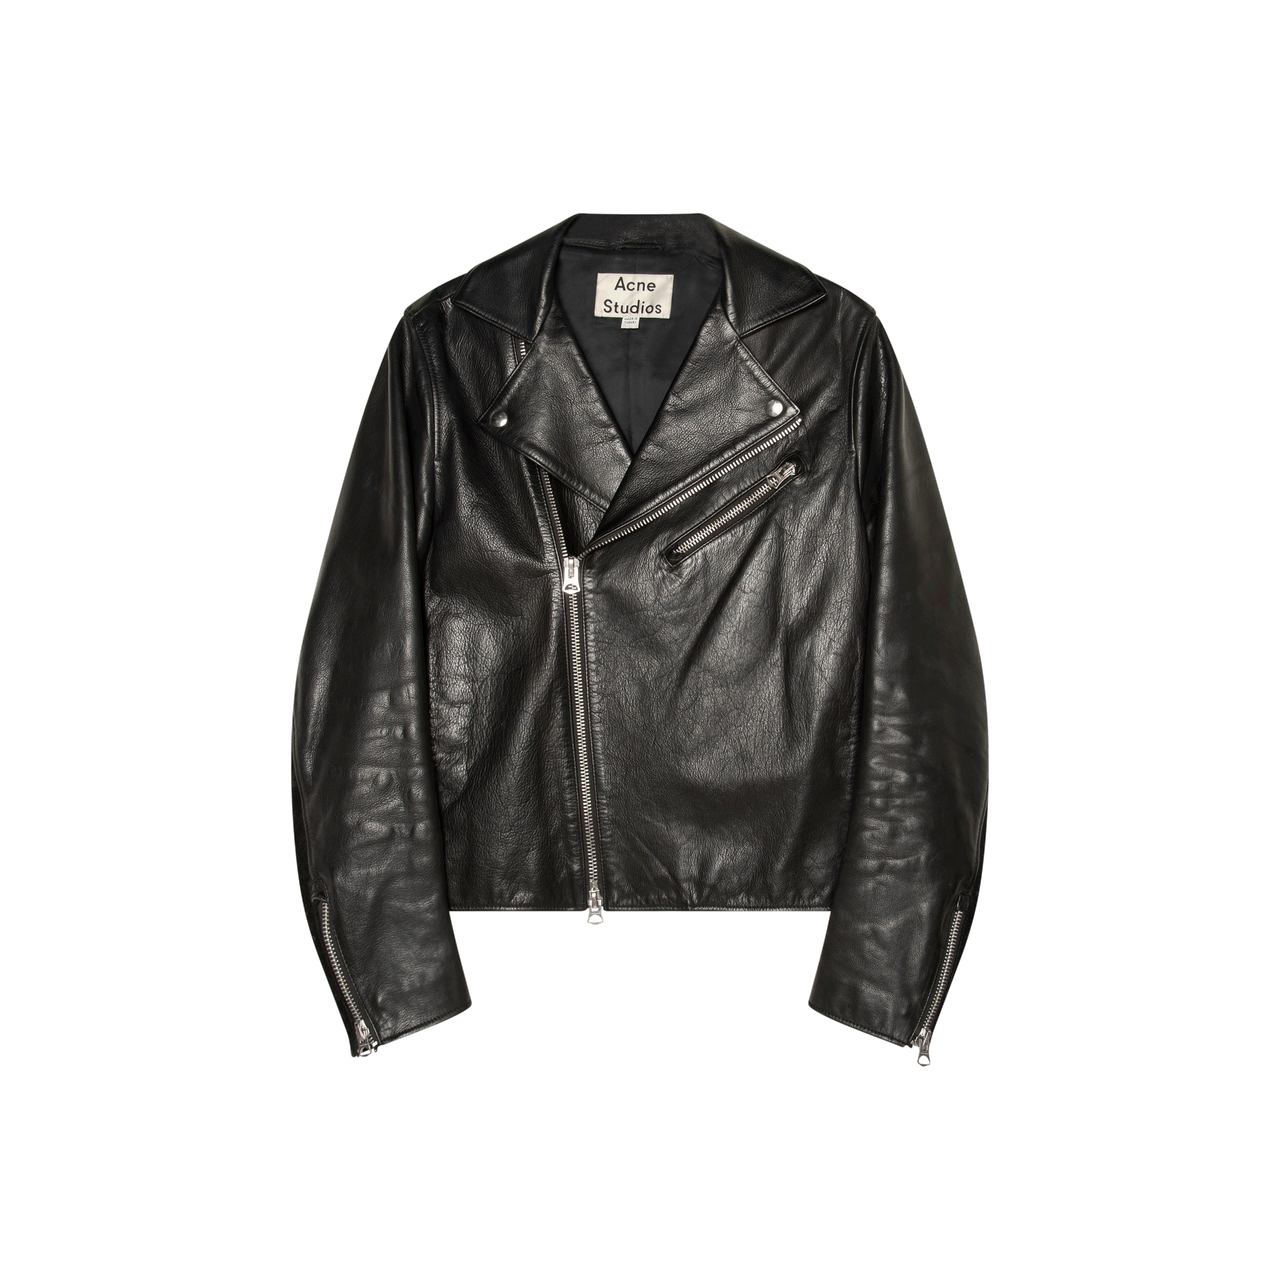 Acne Studios Gibson Leather Jacket by Elizabeth Paulson | Basic.Space